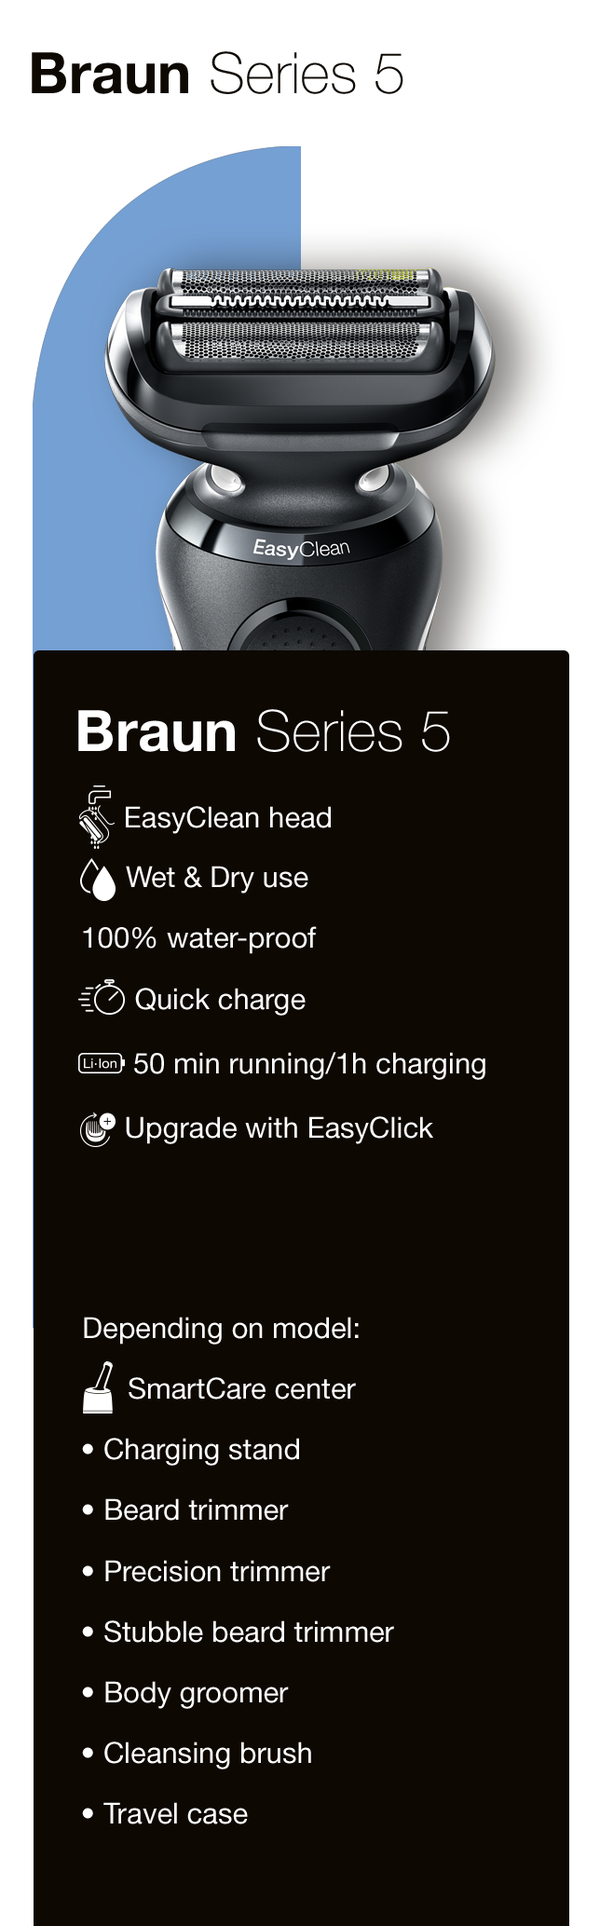 Braun series 5 electric shaver USP's